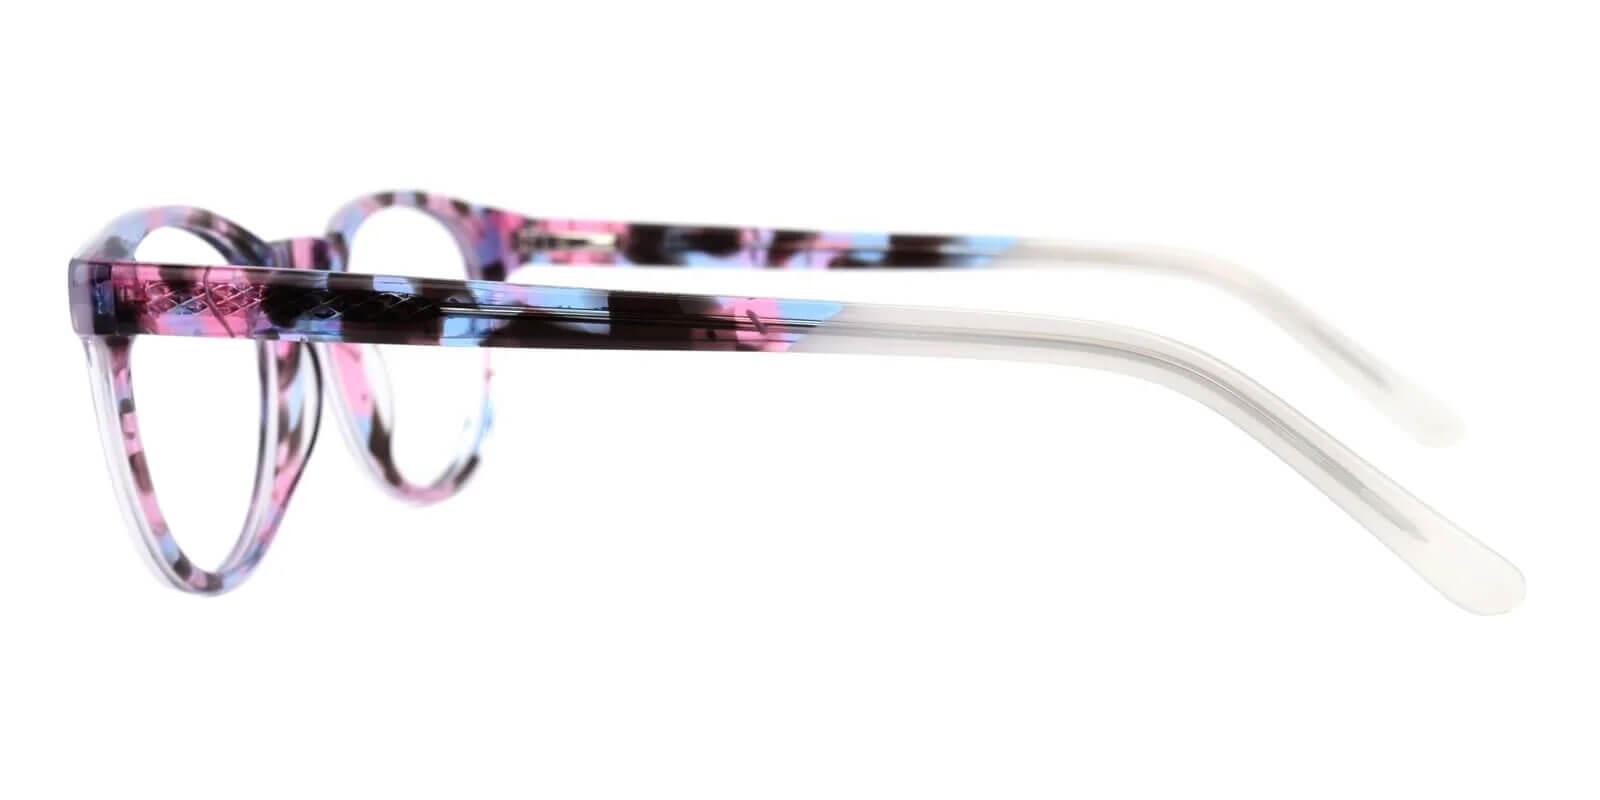 Otava Purple Acetate Eyeglasses , UniversalBridgeFit Frames from ABBE Glasses